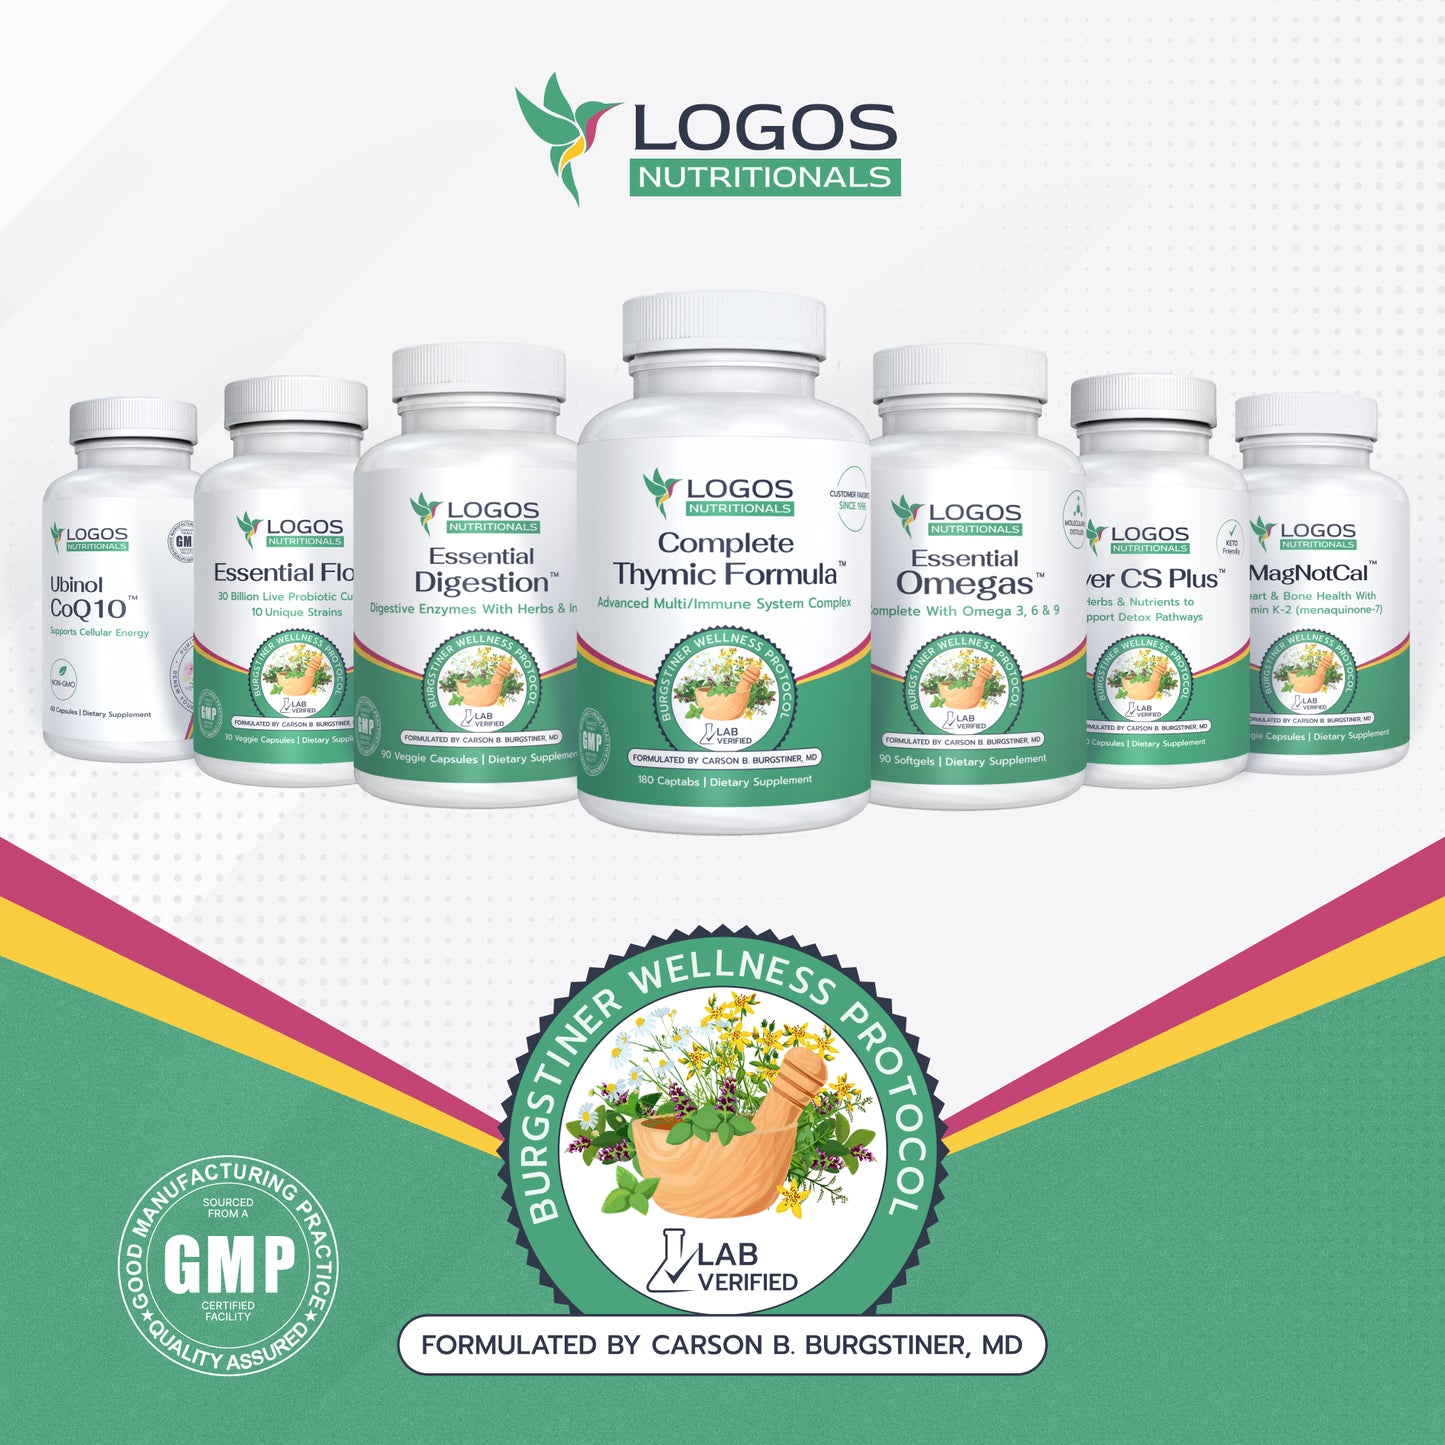 The Logos Lyme Disease Protocol & Extension